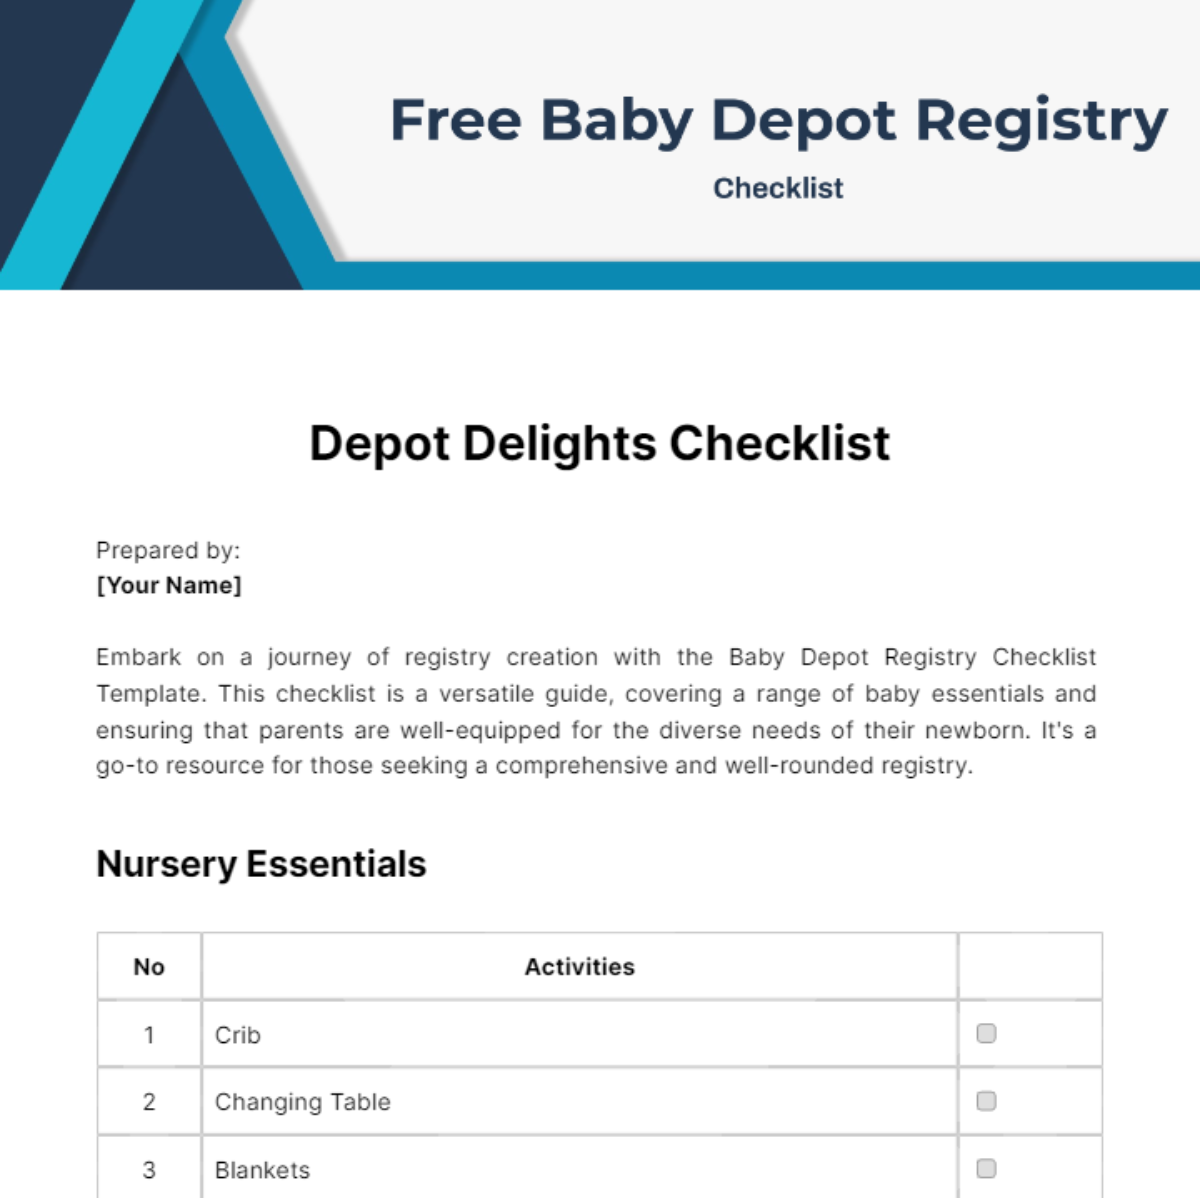 Free Baby Depot Registry Checklist Template